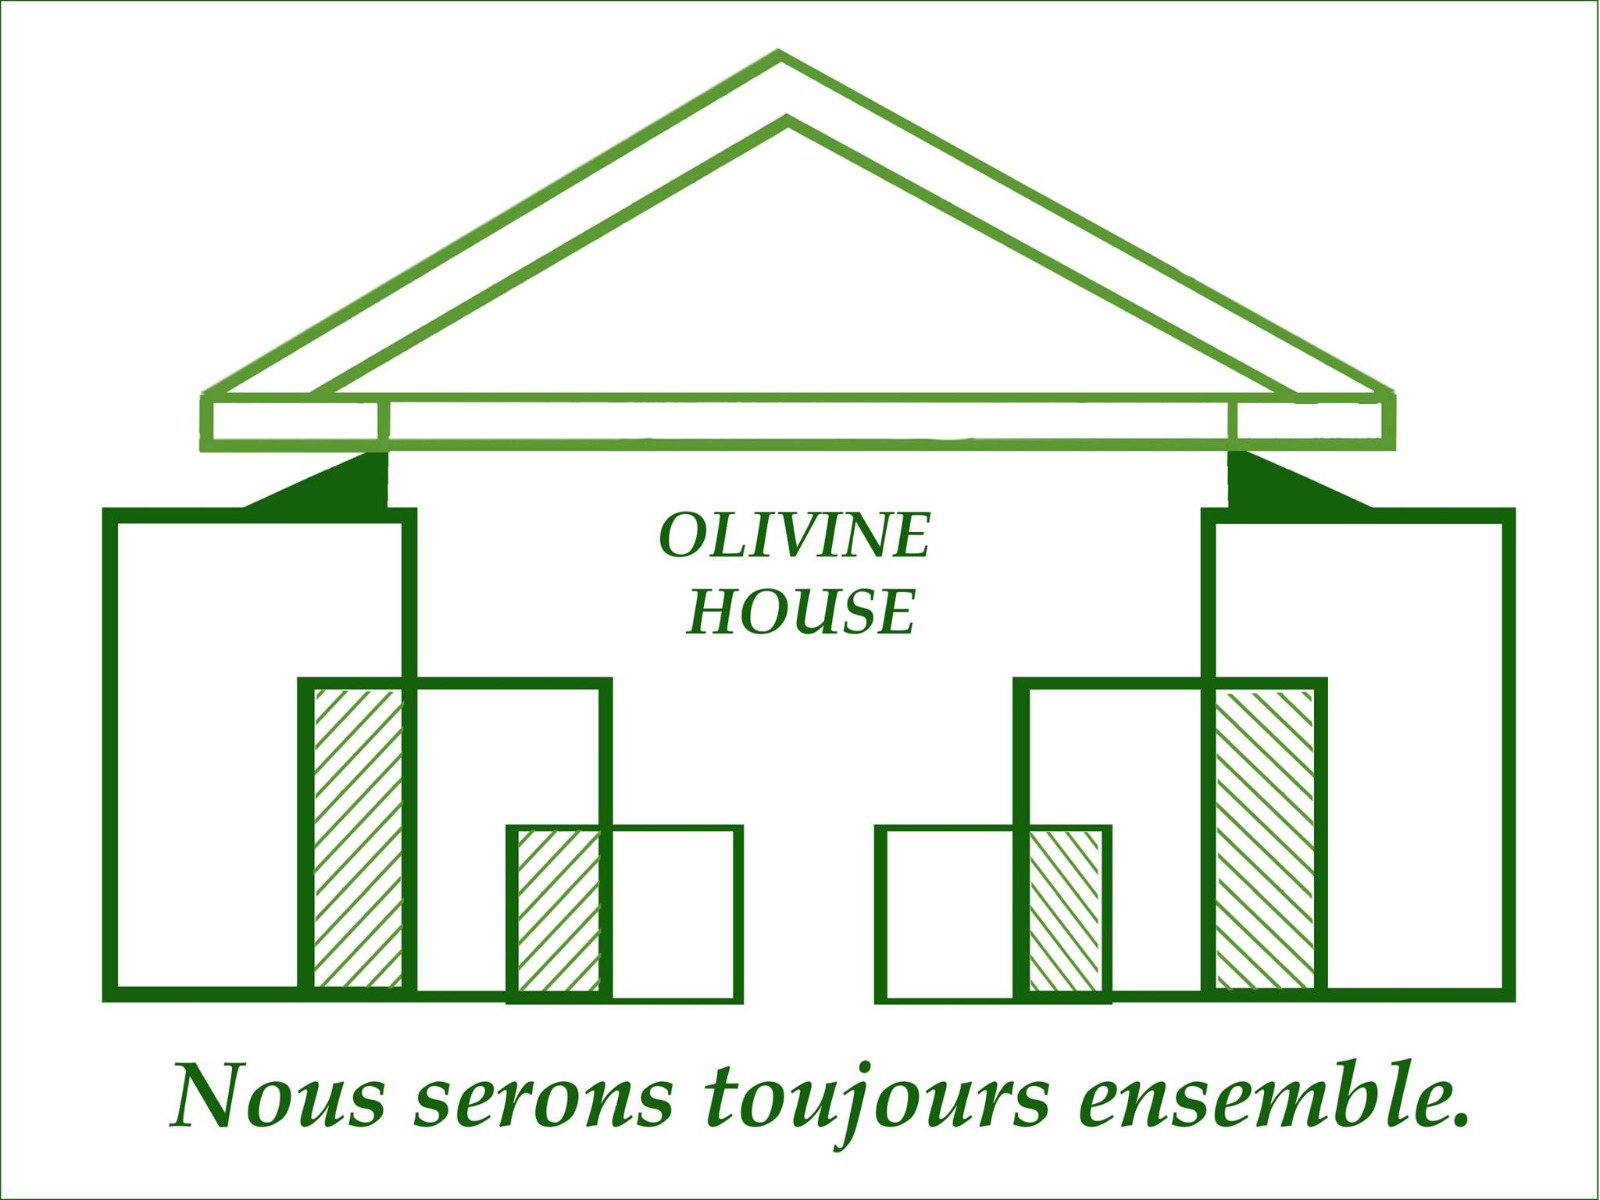 Olivine House